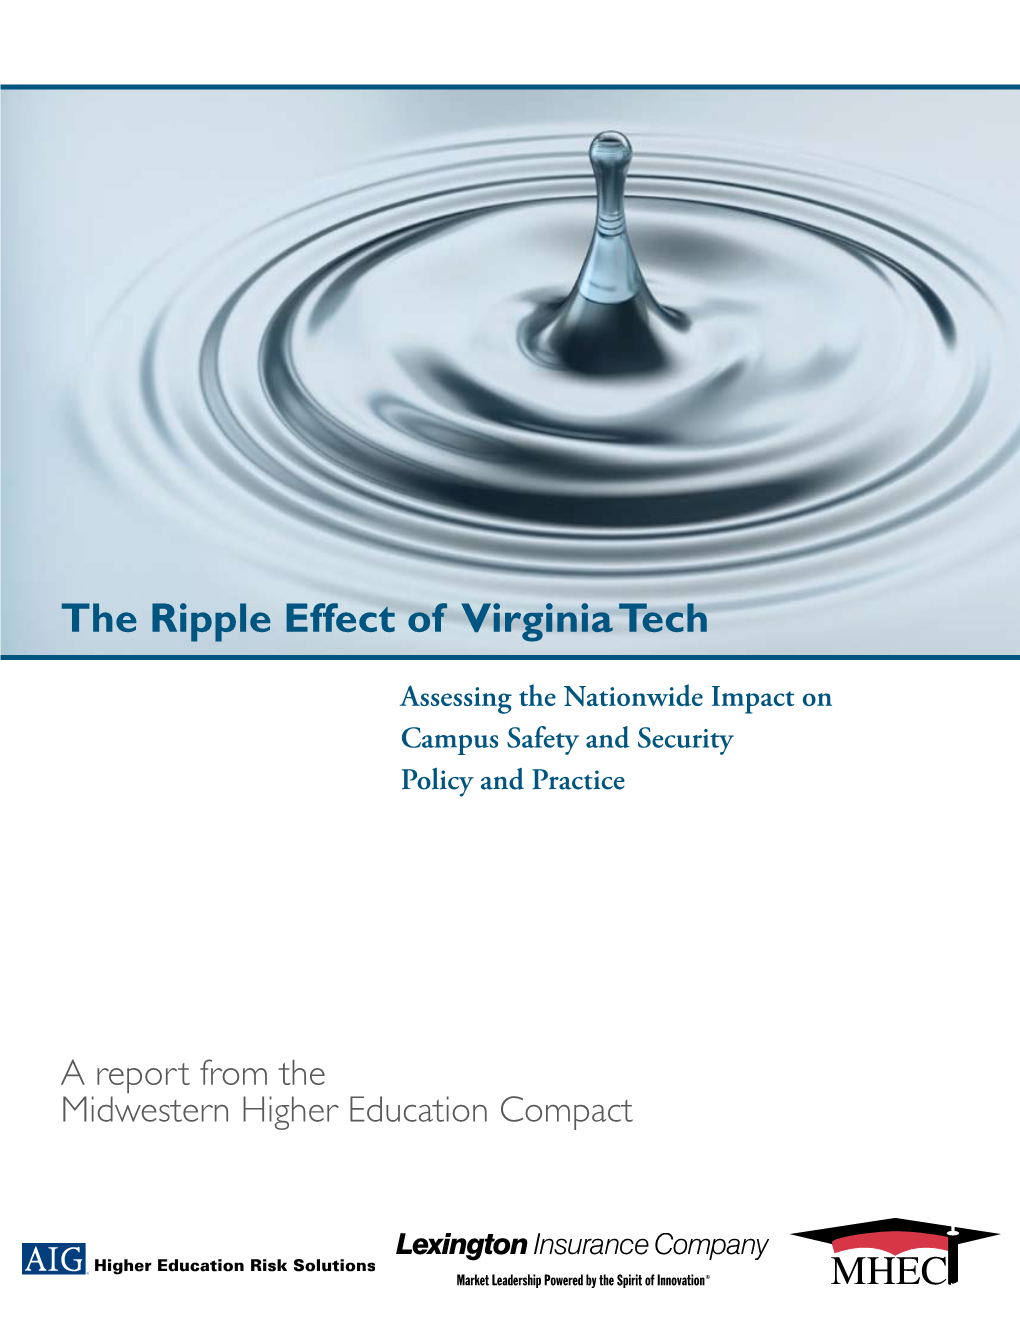 The Ripple Effect of Virginia Tech